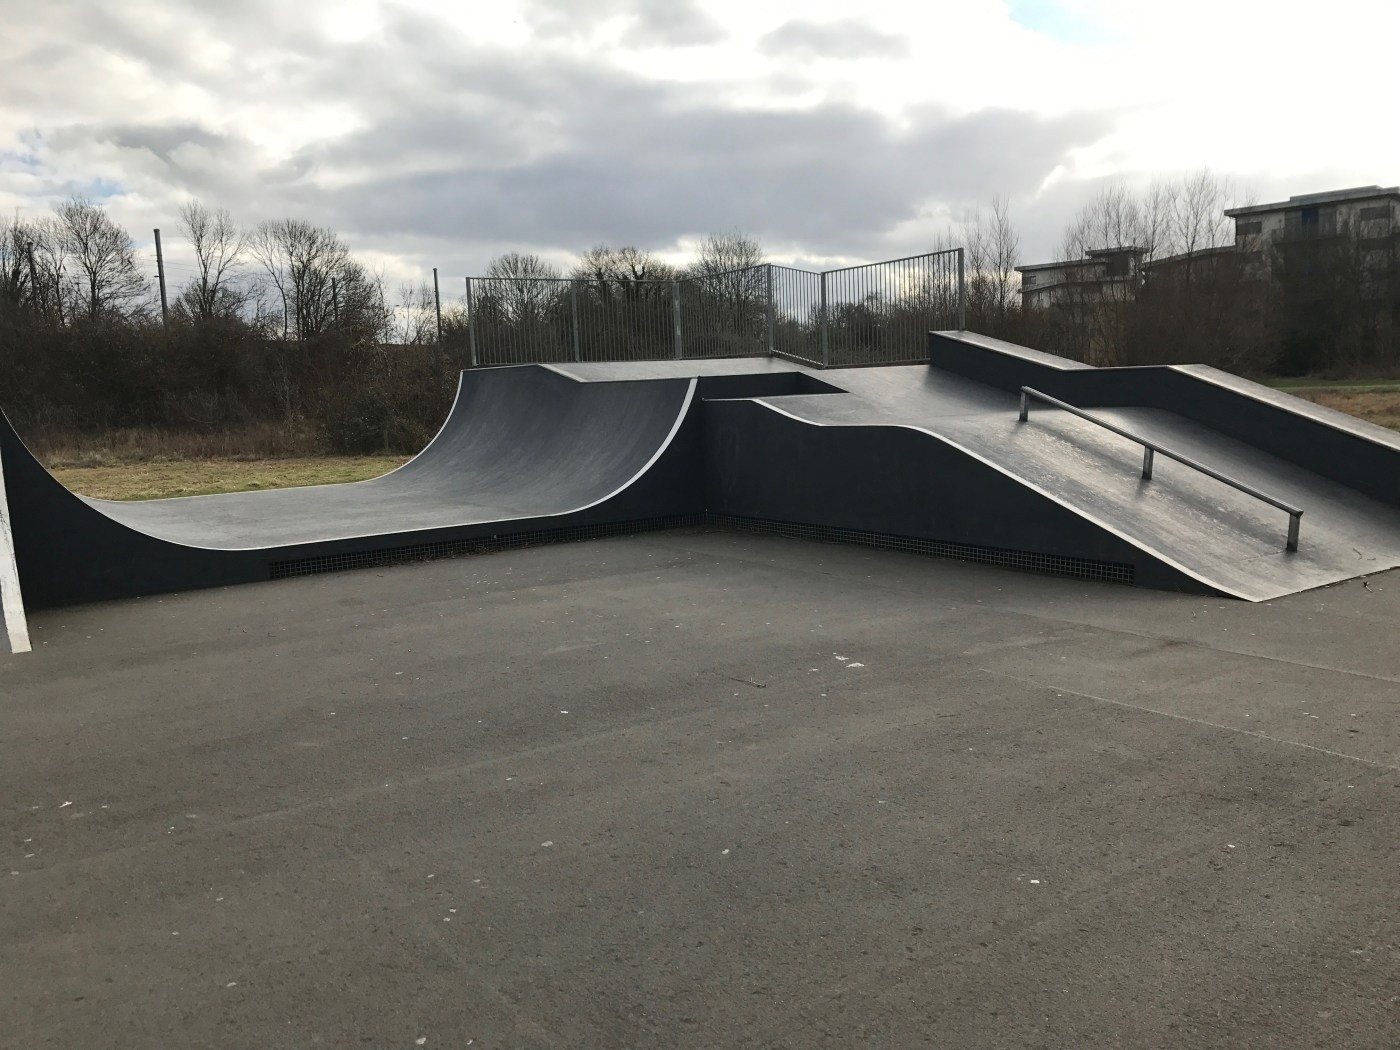 Stukeley Meadows skatepark